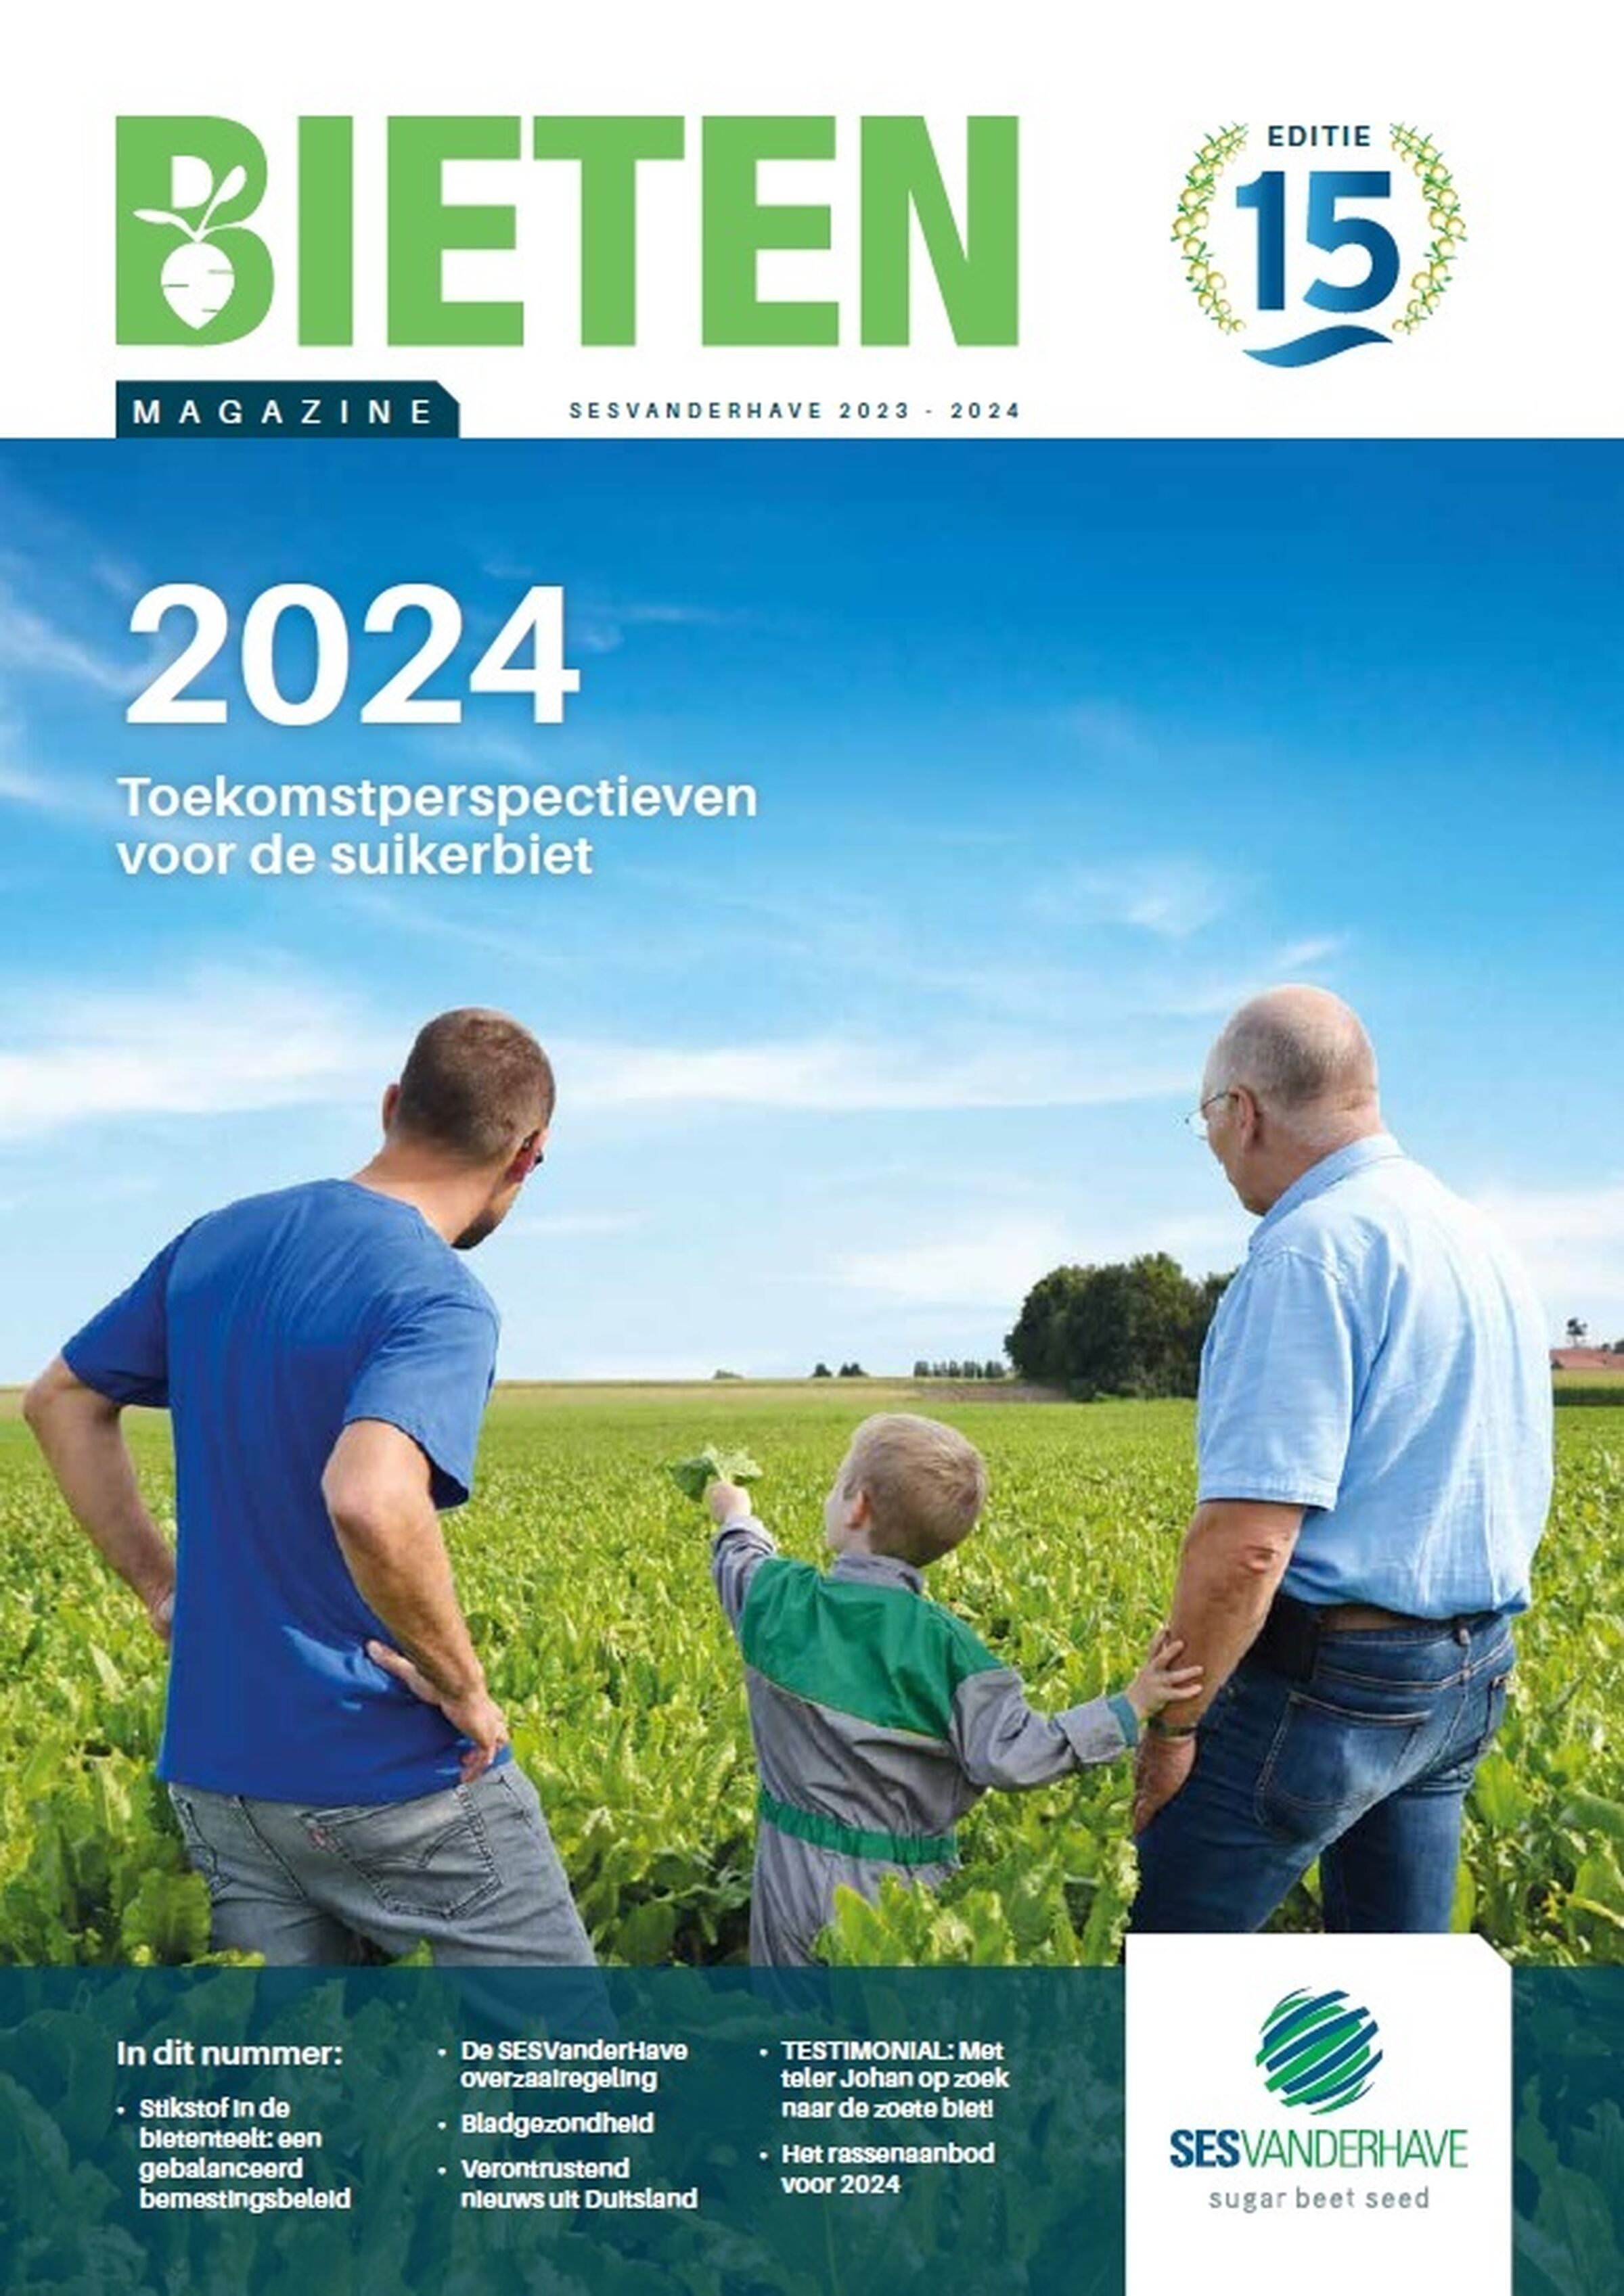 Sesvanderhave nederland nieuws Bietenmagazine 2023 2024 cover